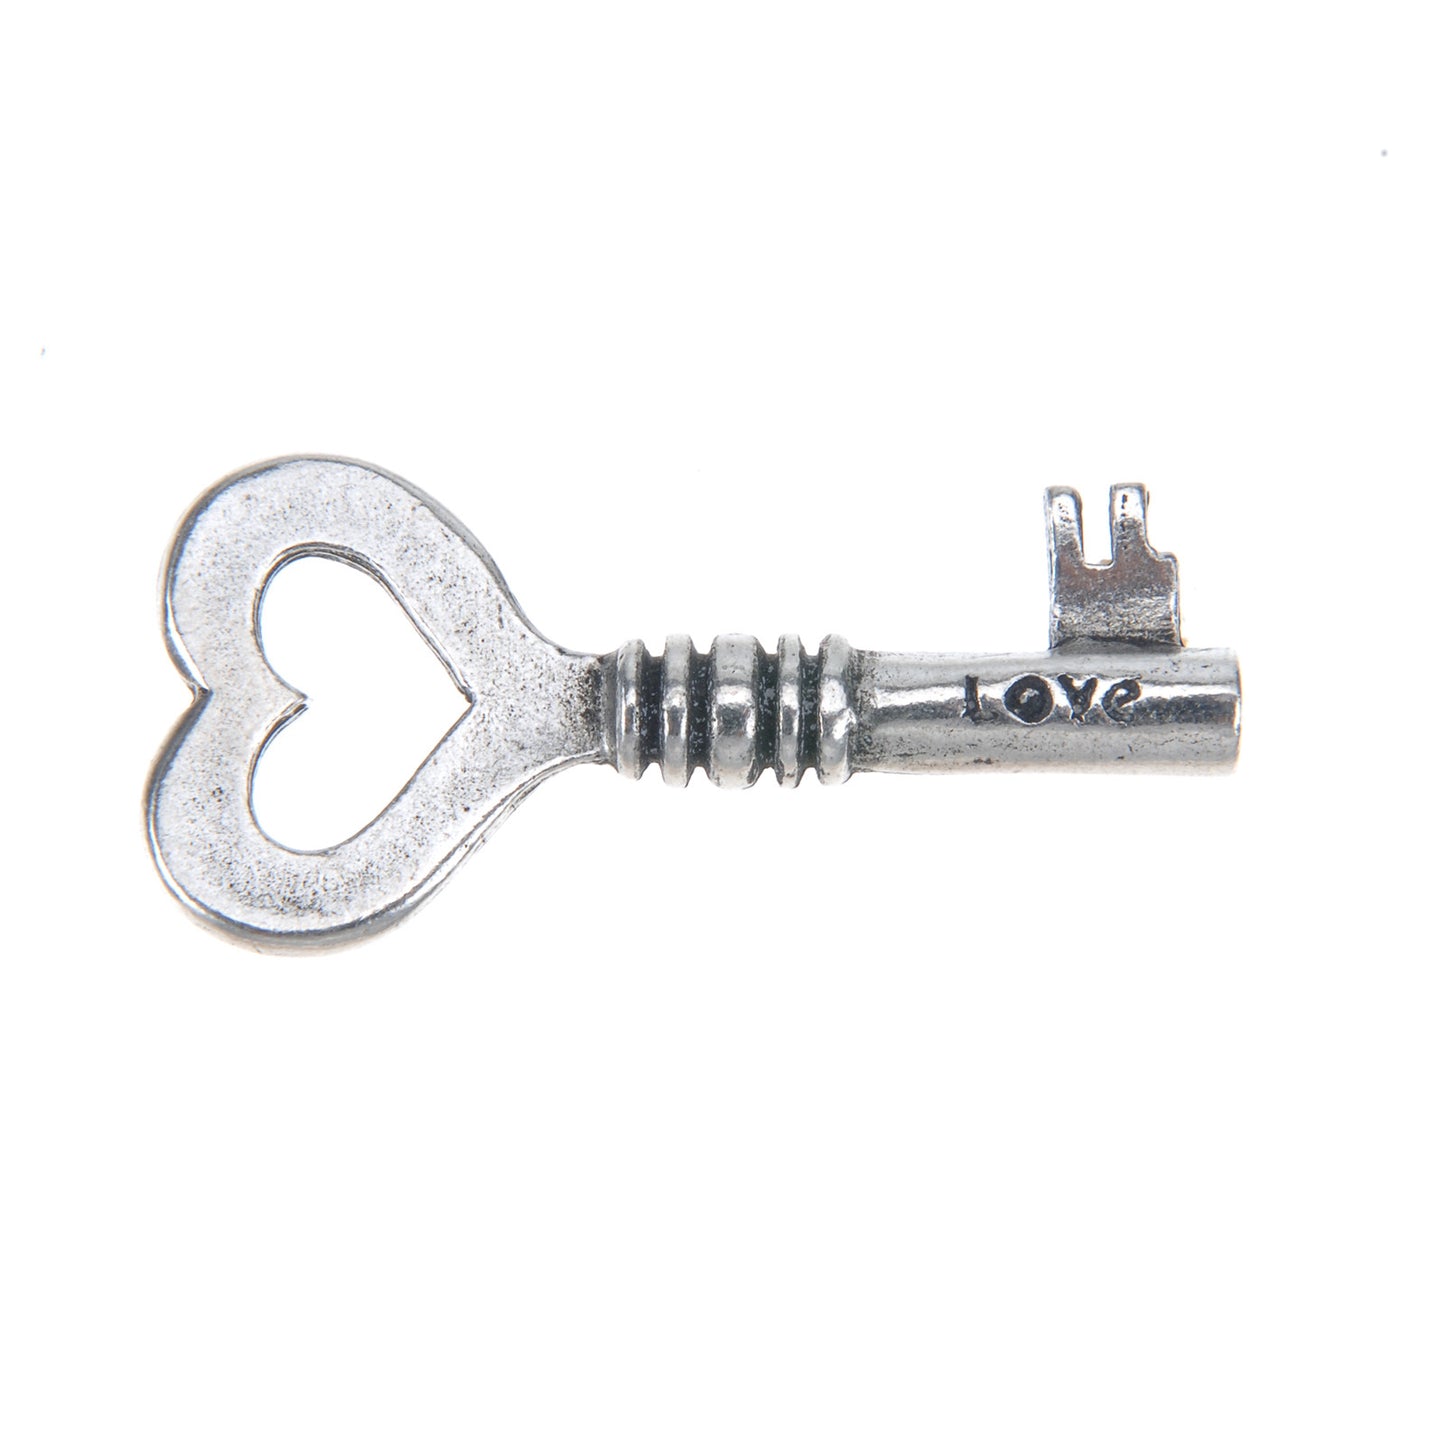 Love Key Charm - Whitney Howard Designs